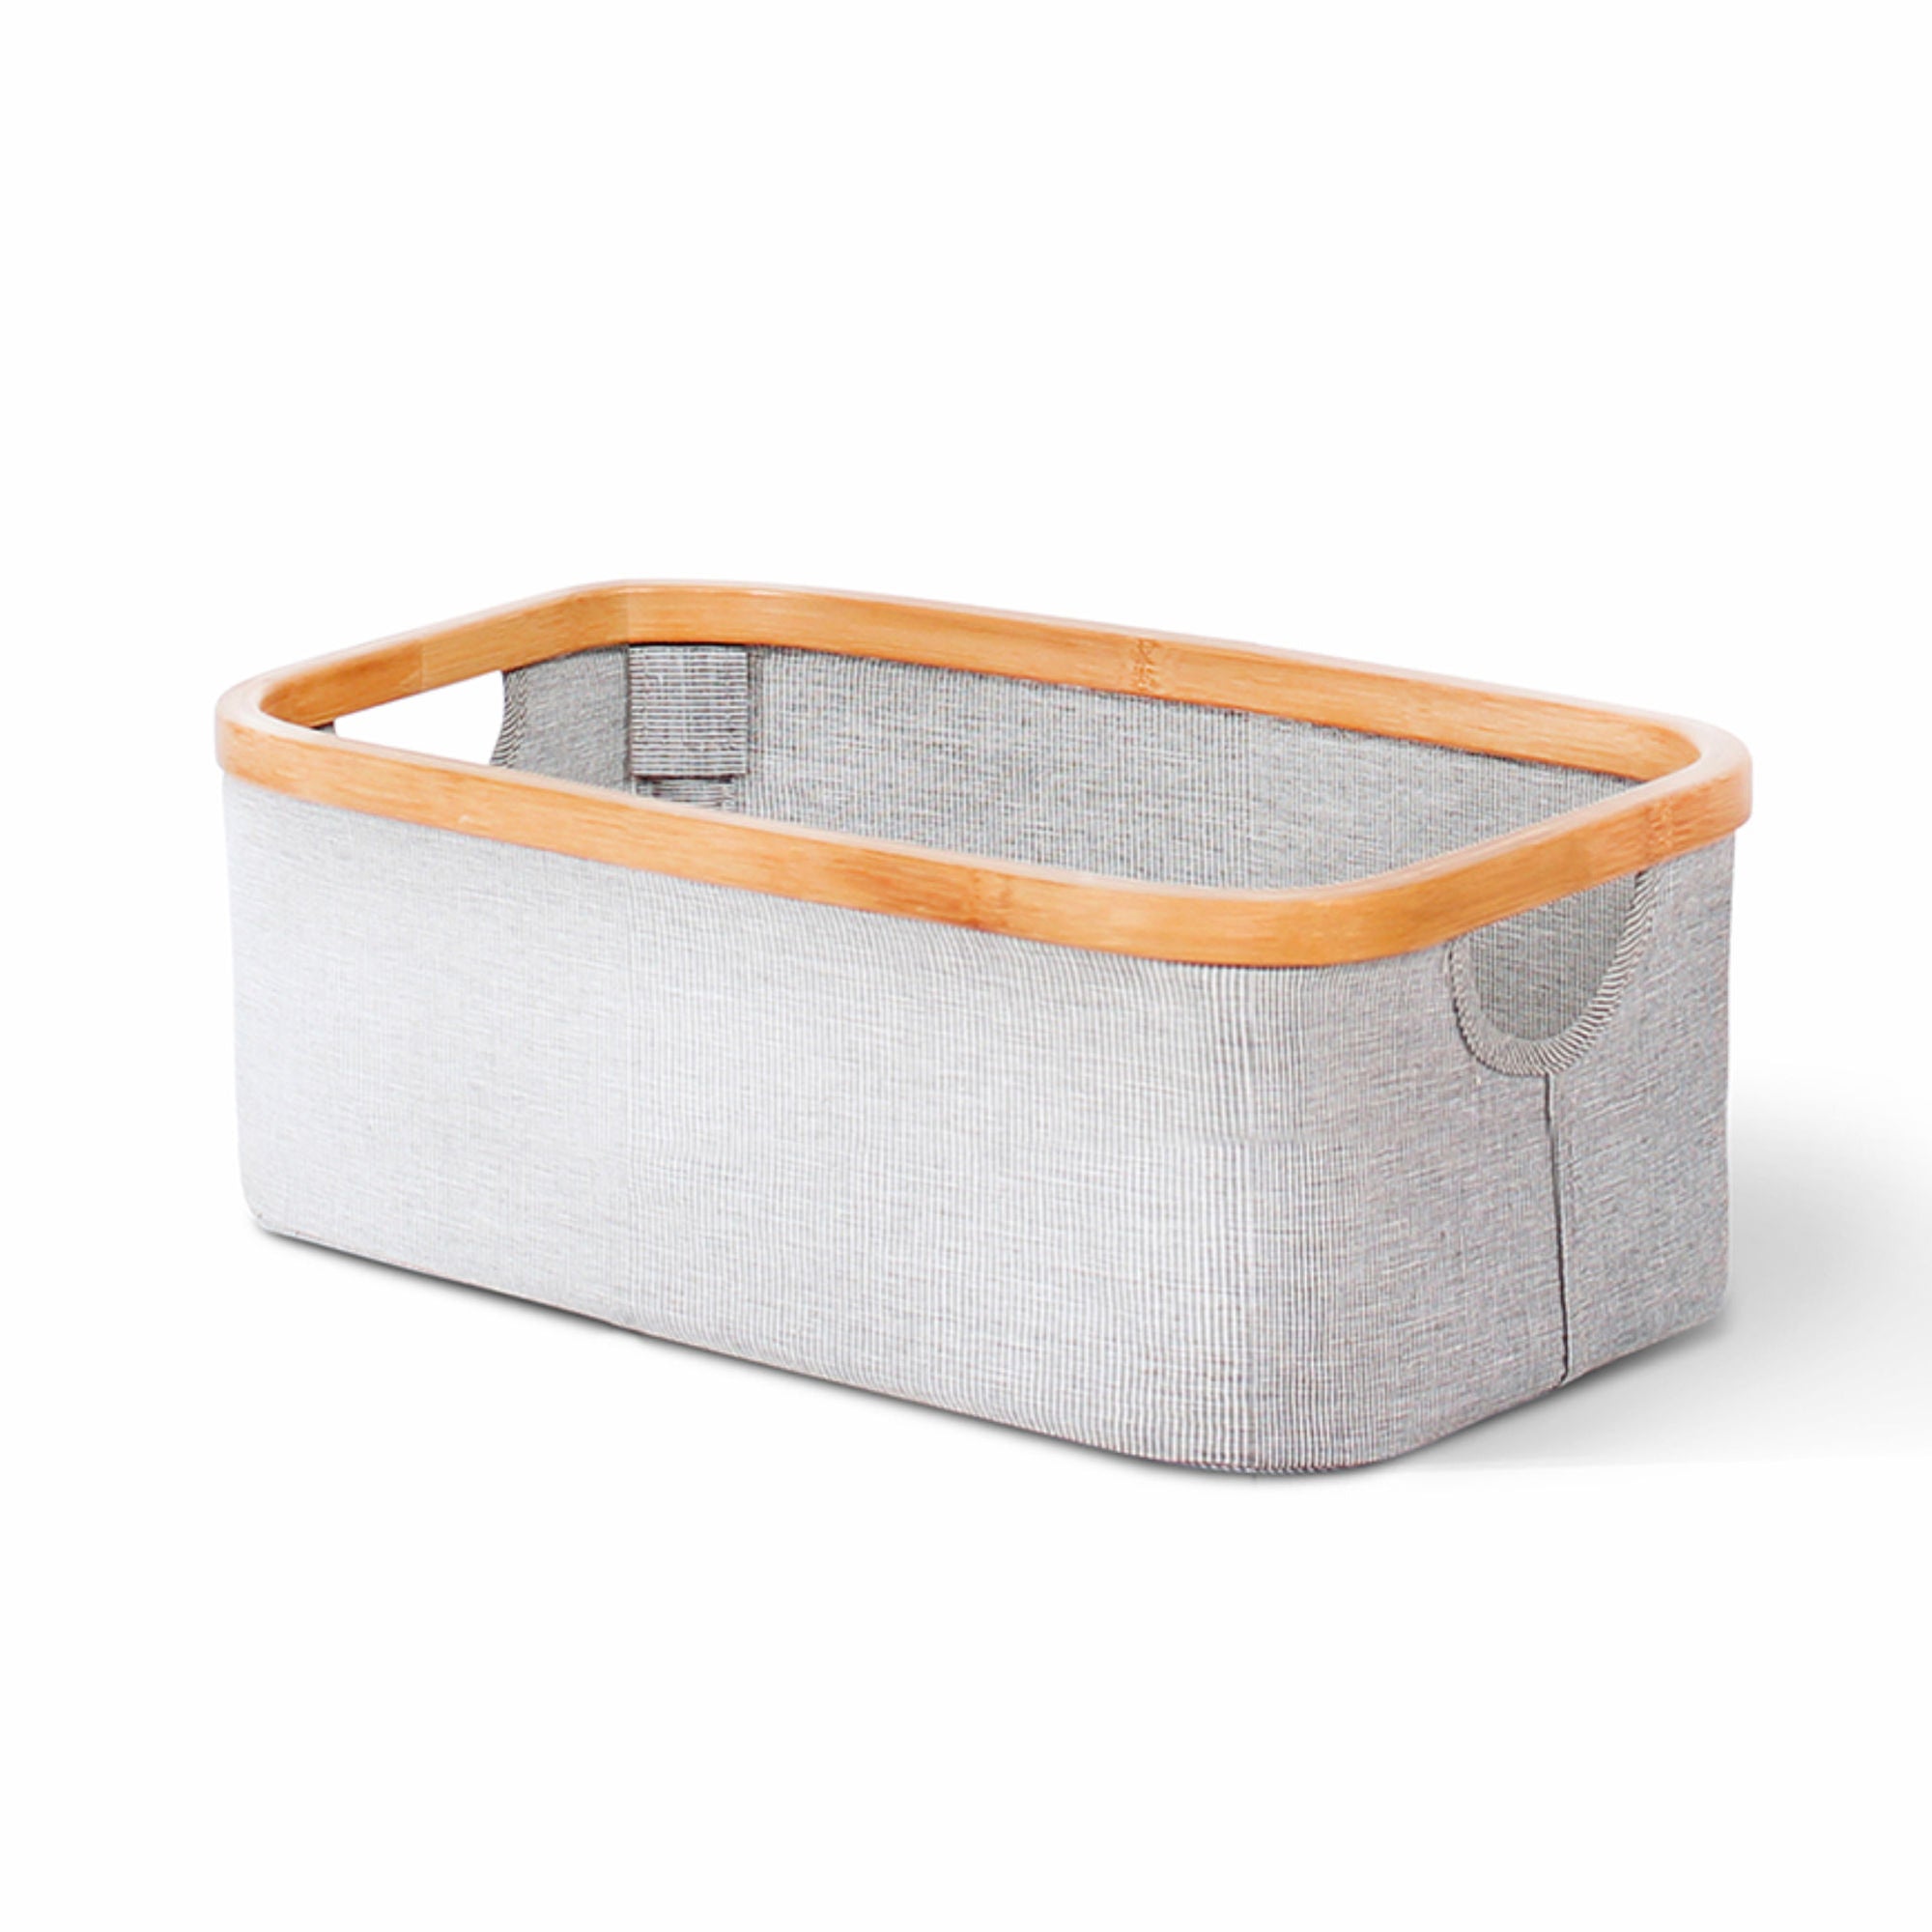 Gudee Frasa storage basket, rectangular